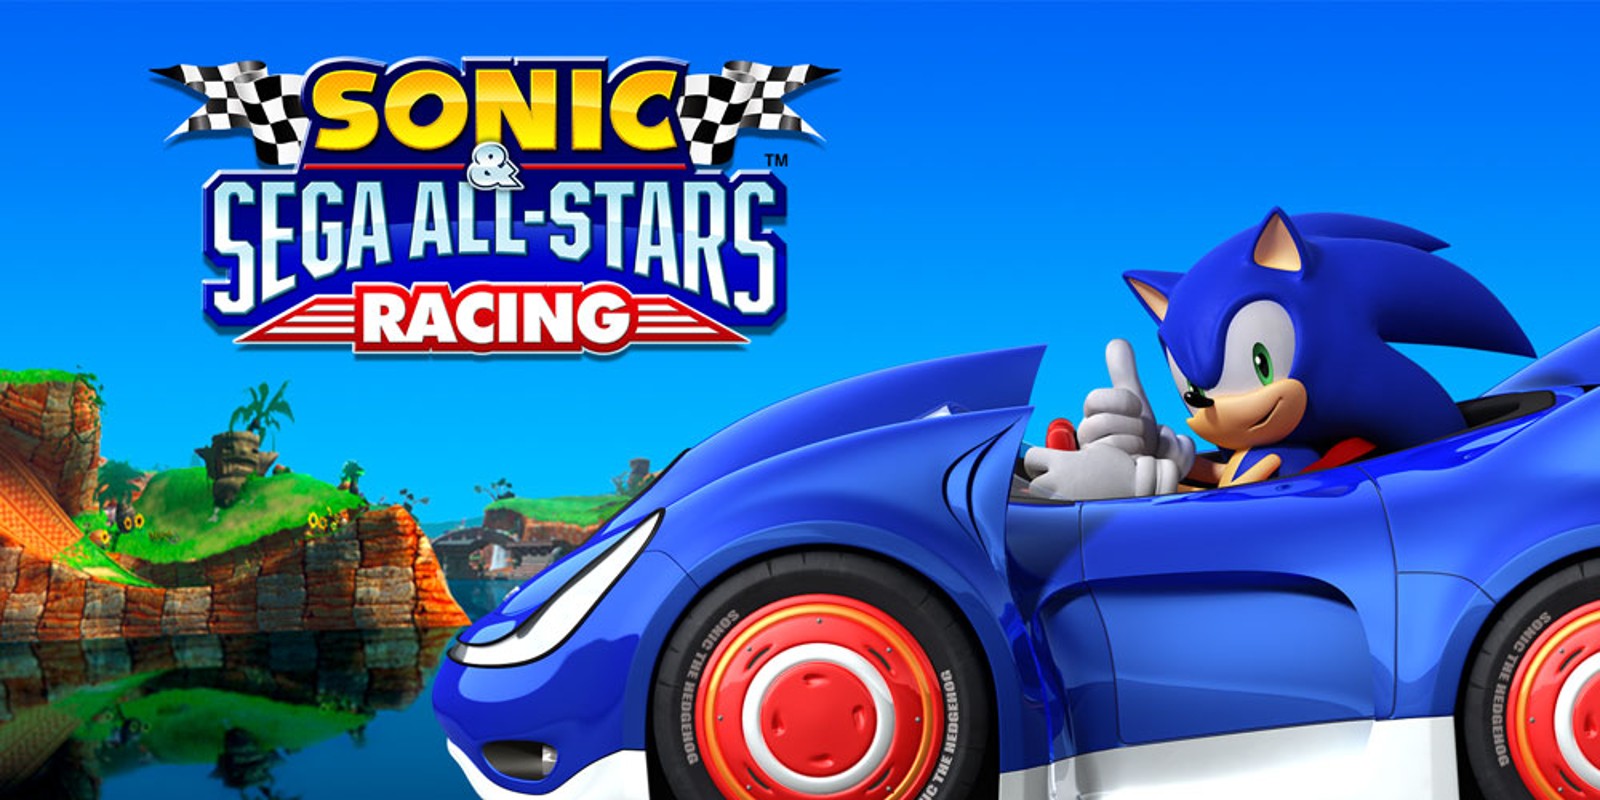 sonic and sega all stars racing logo